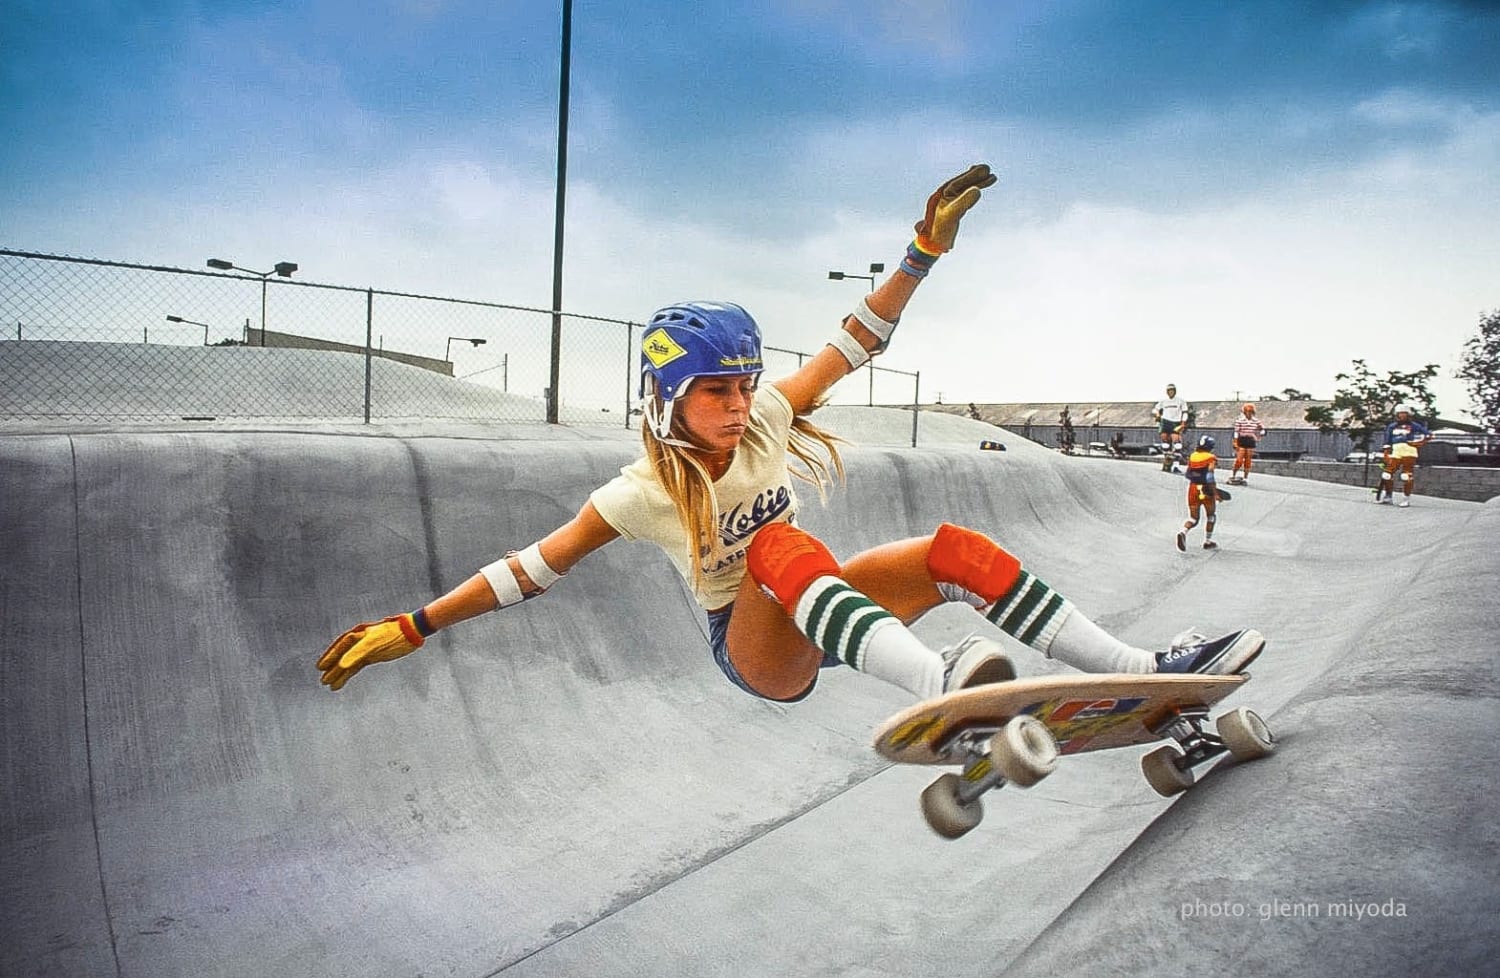 Vicki Vickers - Female Skateboarder of the Year (1978)